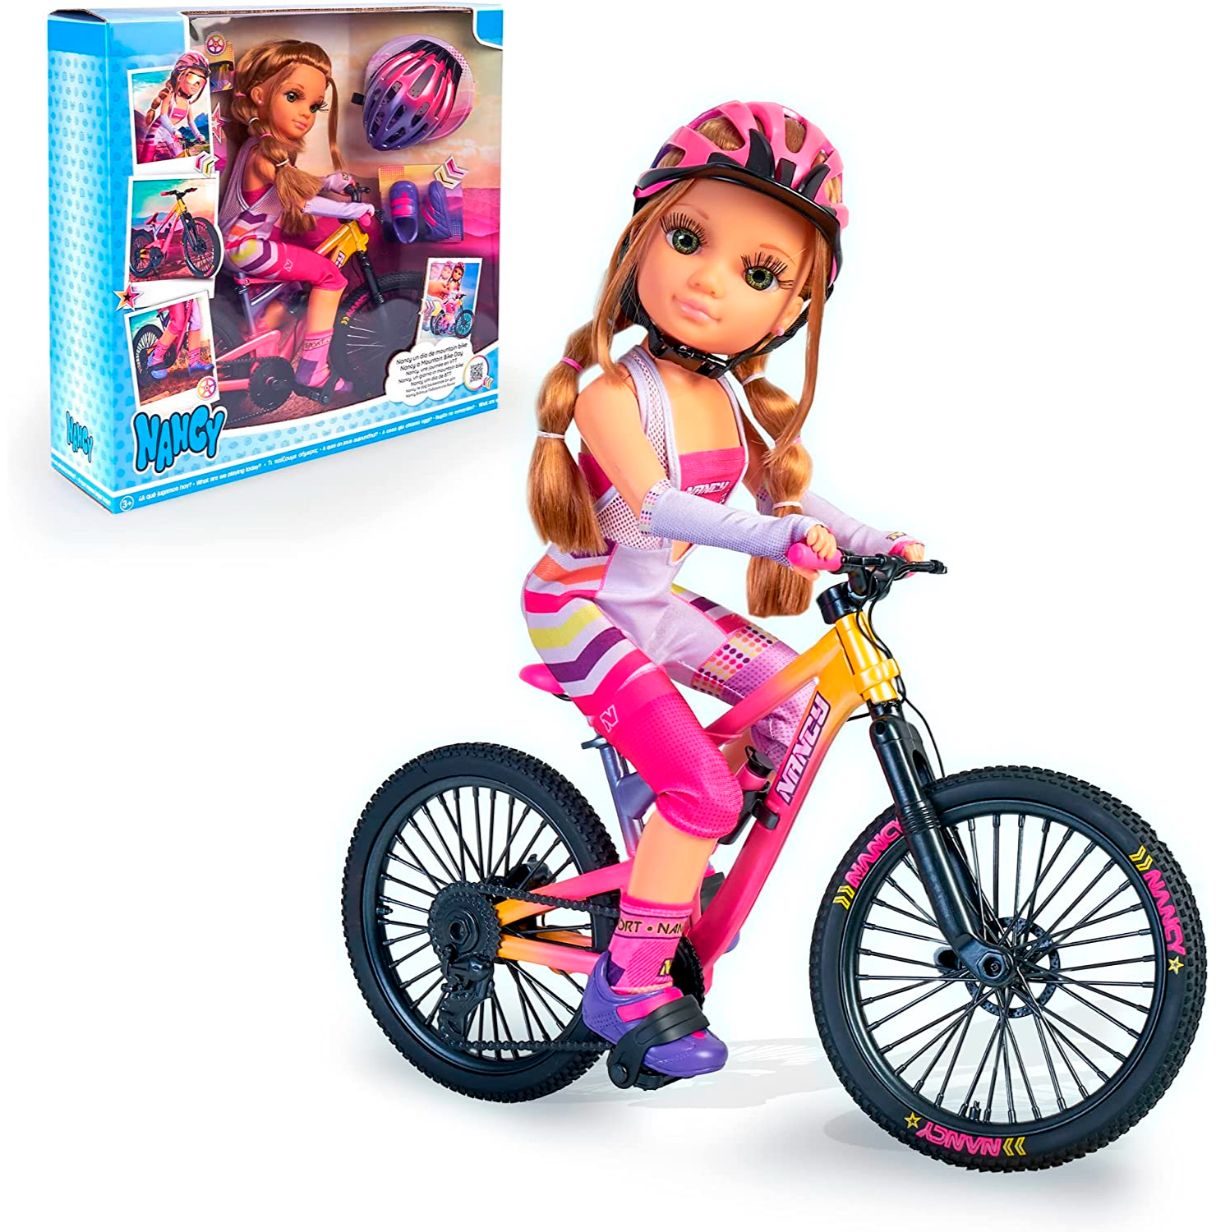 nancy - un día de mountain bike, muñeca articulada con outfit de ciclista, complementos y accesorios, bicicleta que se mueve, se